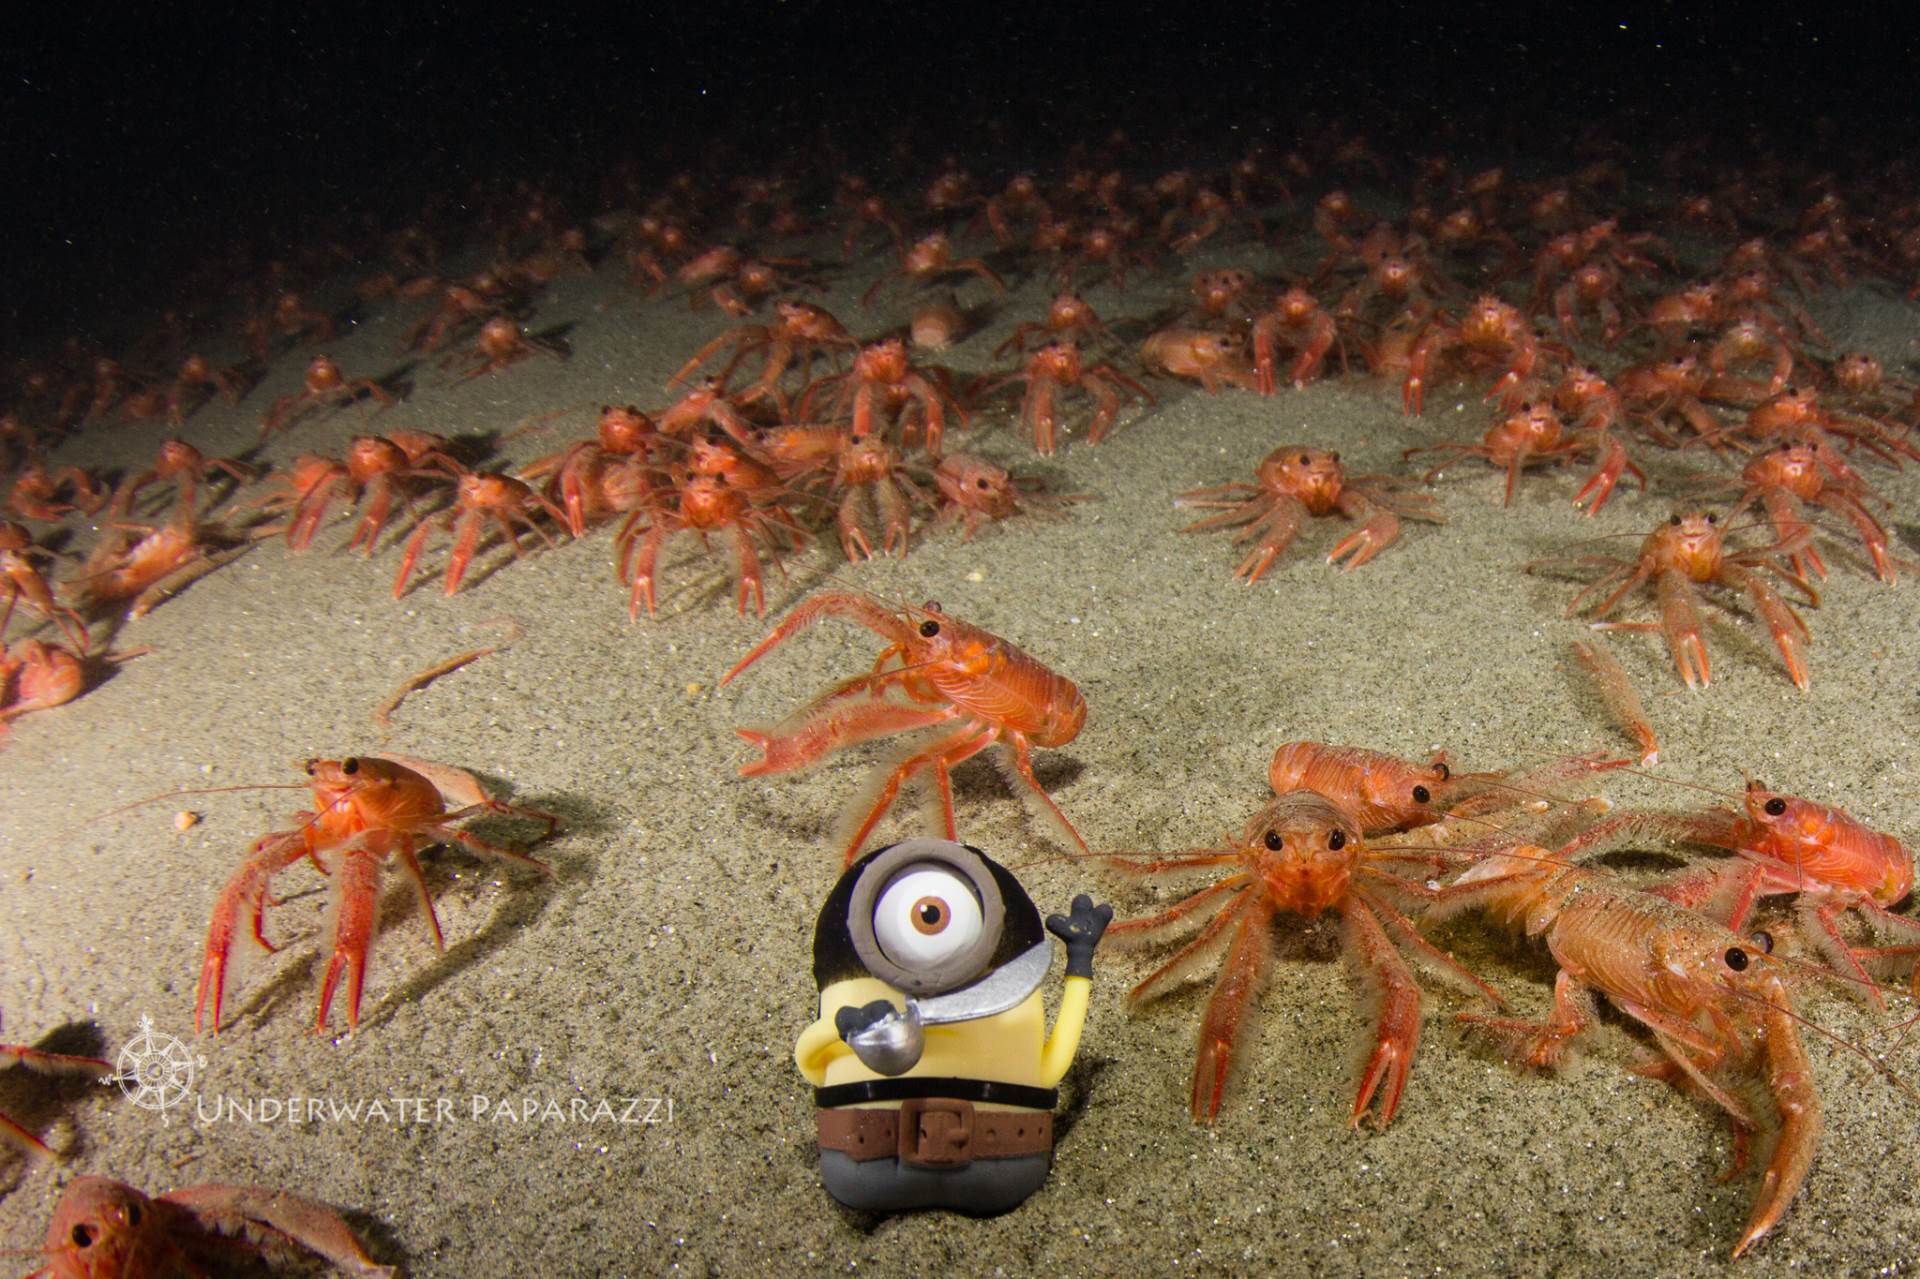 Tuna Crabs take over La jolla Shores at 80 feet below the surface